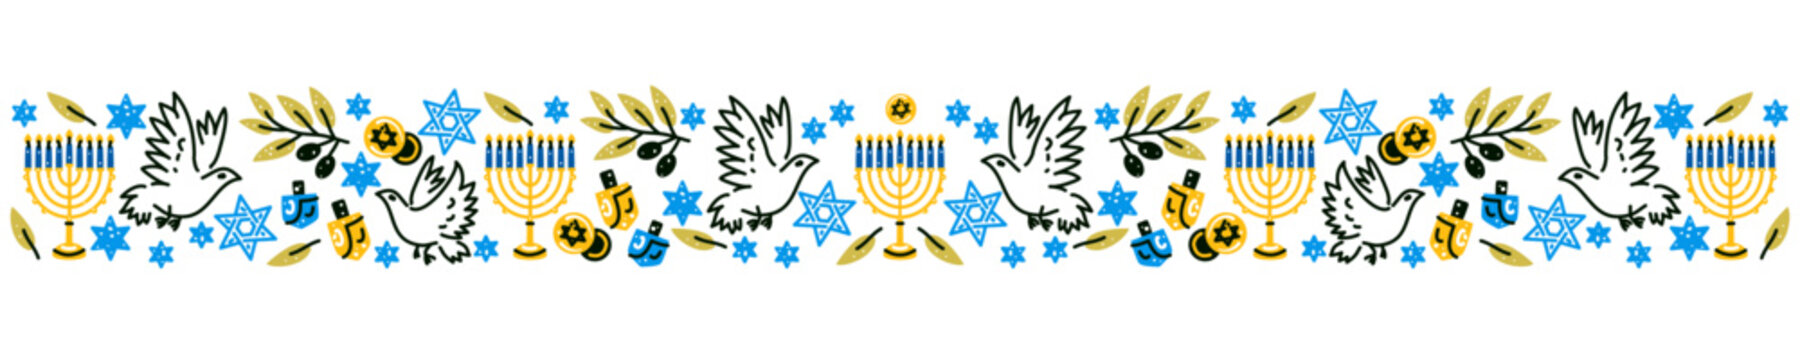 Happy Hanukkah banner. Flat vector illustration. Hanukkah religion holiday background with holiday symbols